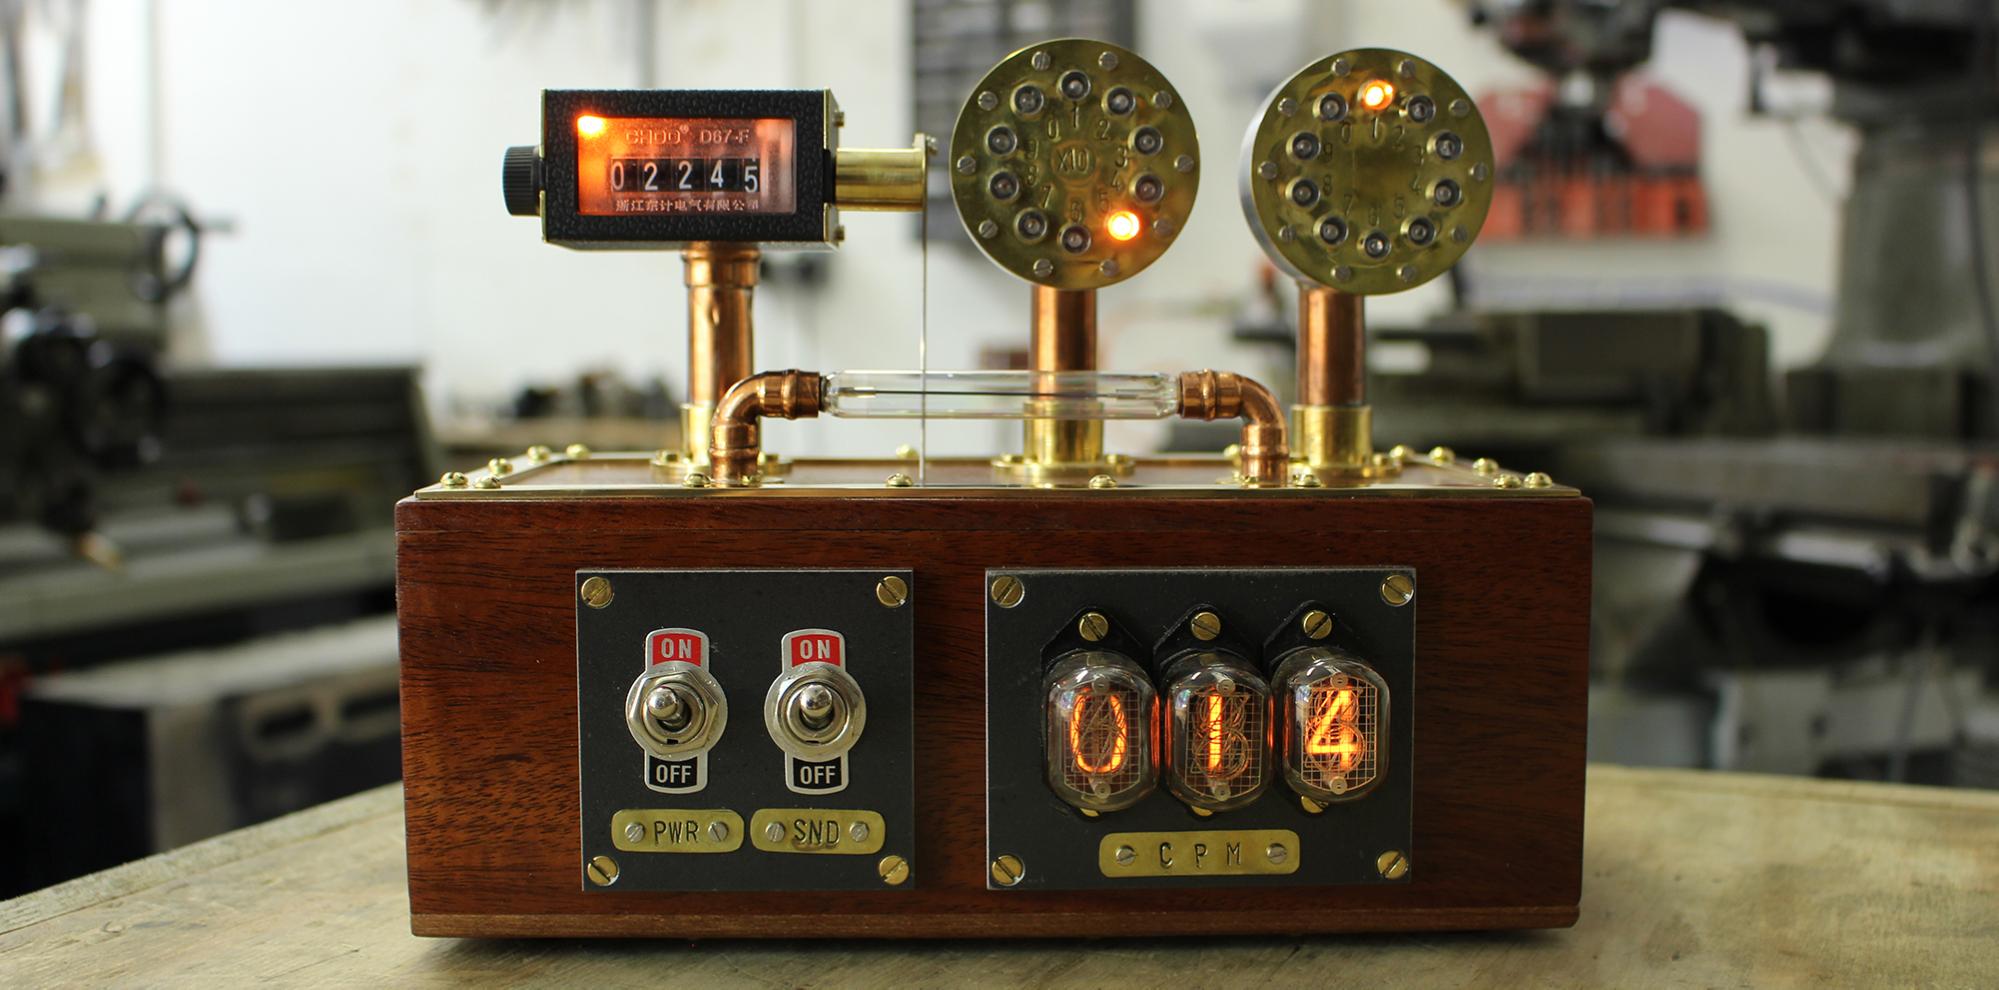 Show & tell: a steampunk desktop background radiation monitor